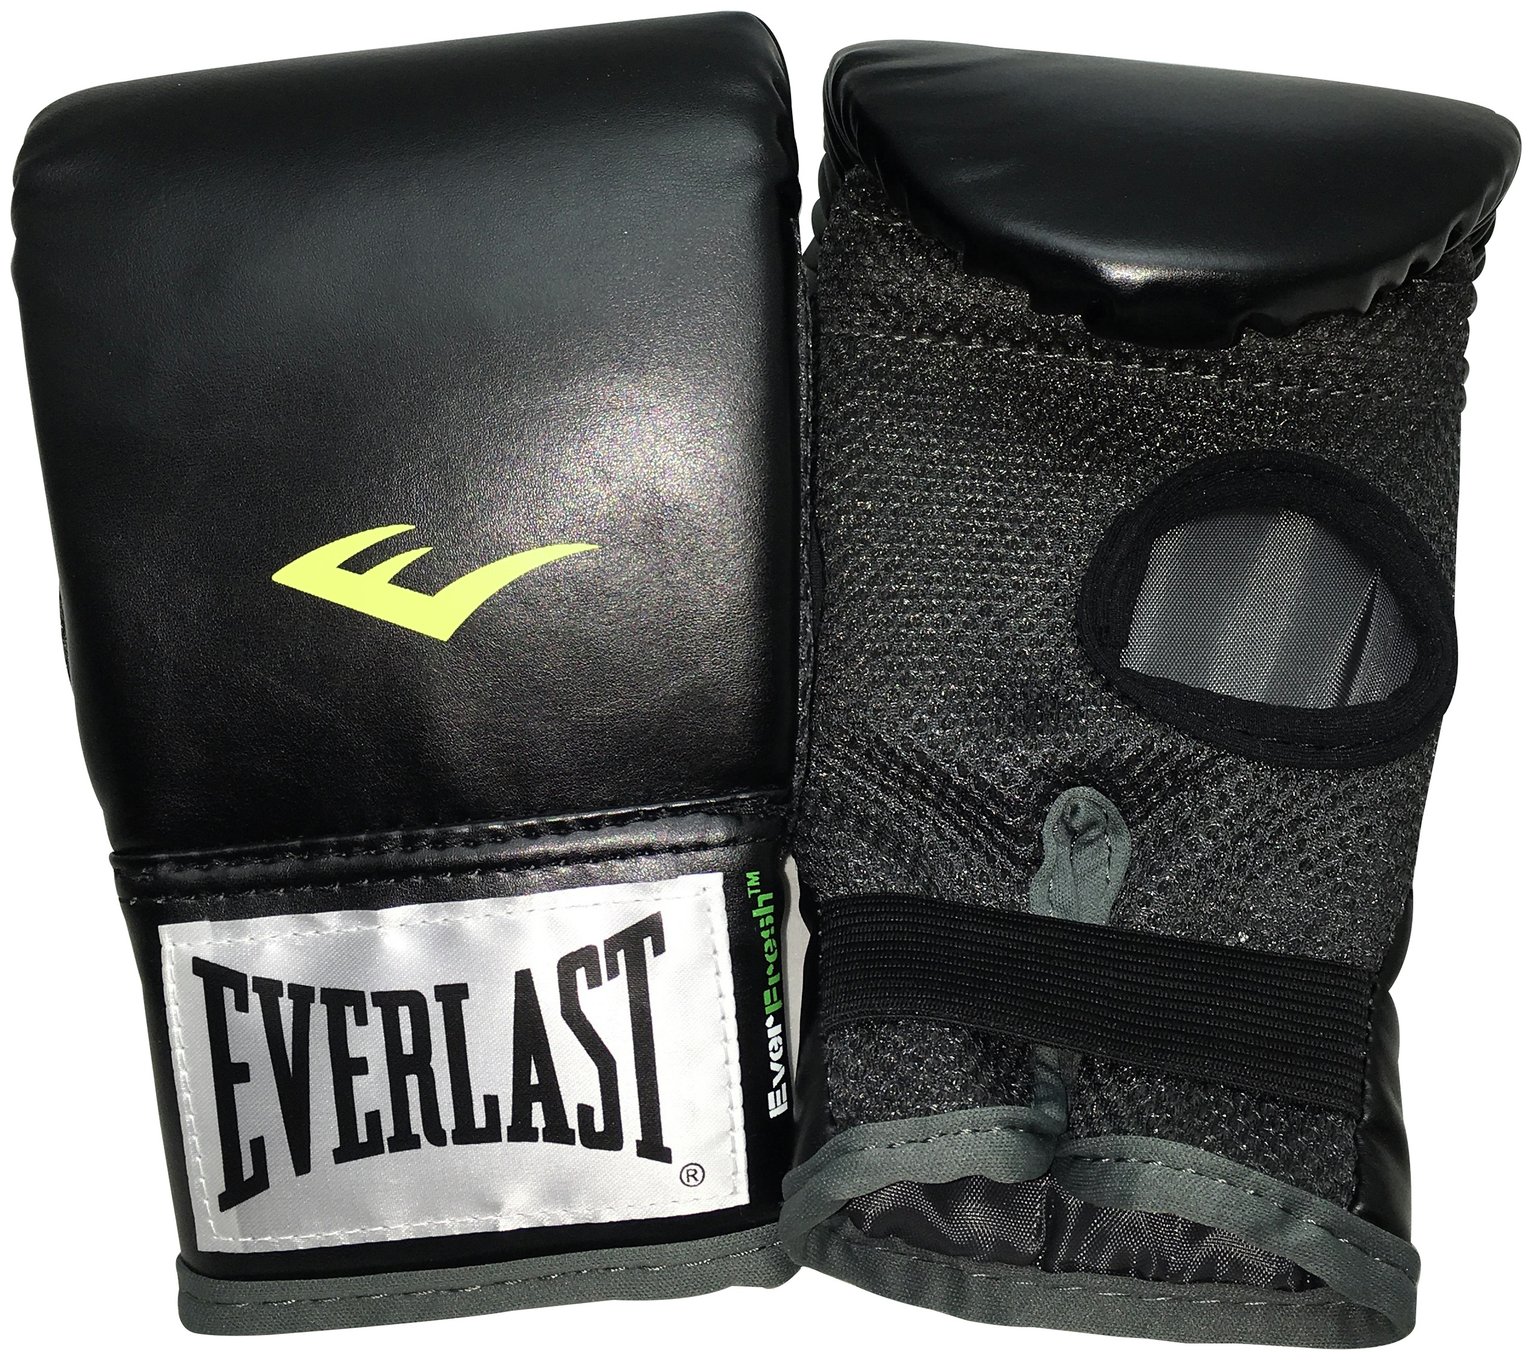 Everlast Speed Bag Kit Reviews